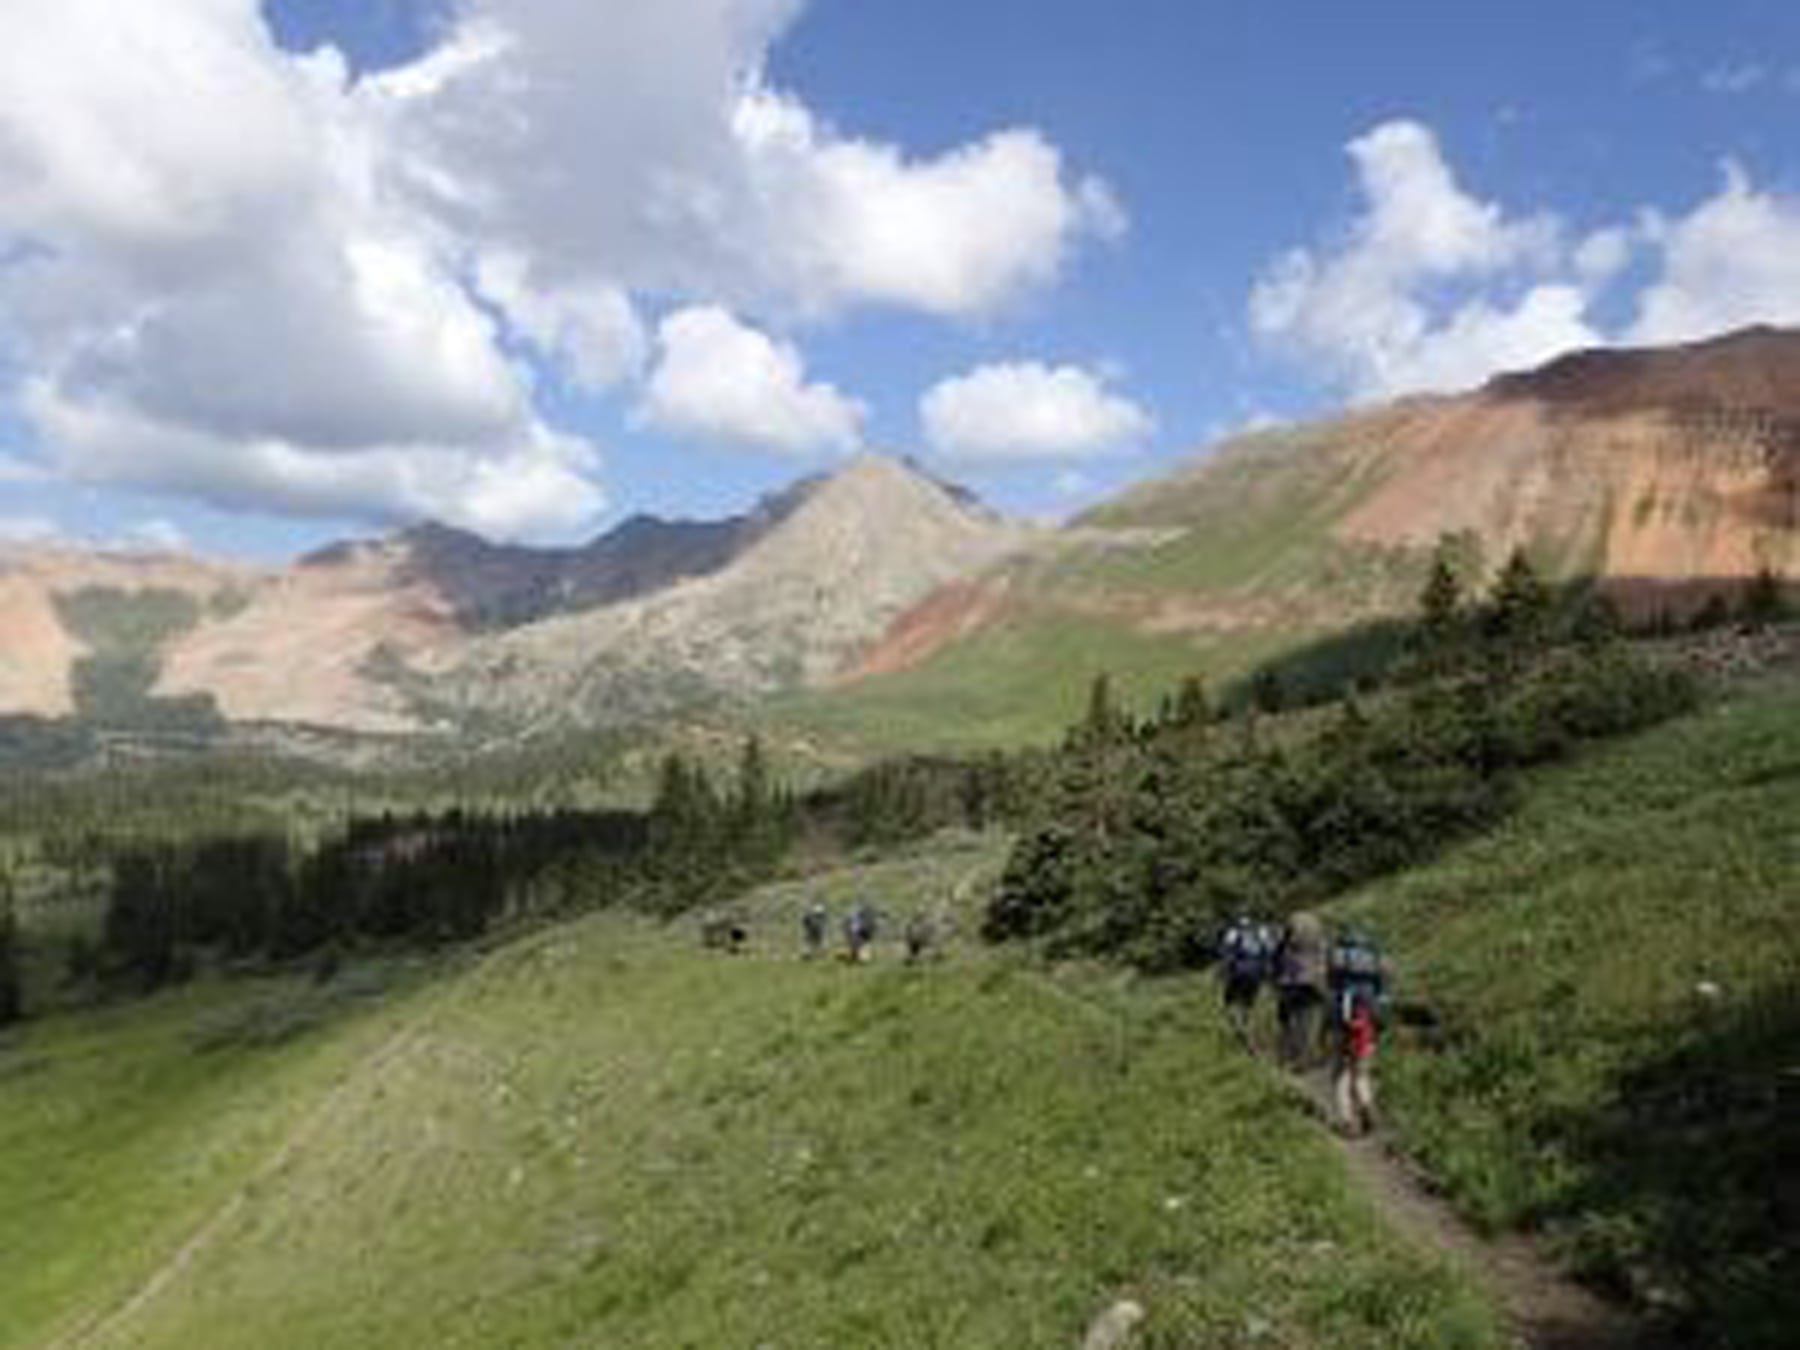 Deer Hill backpackers hike through